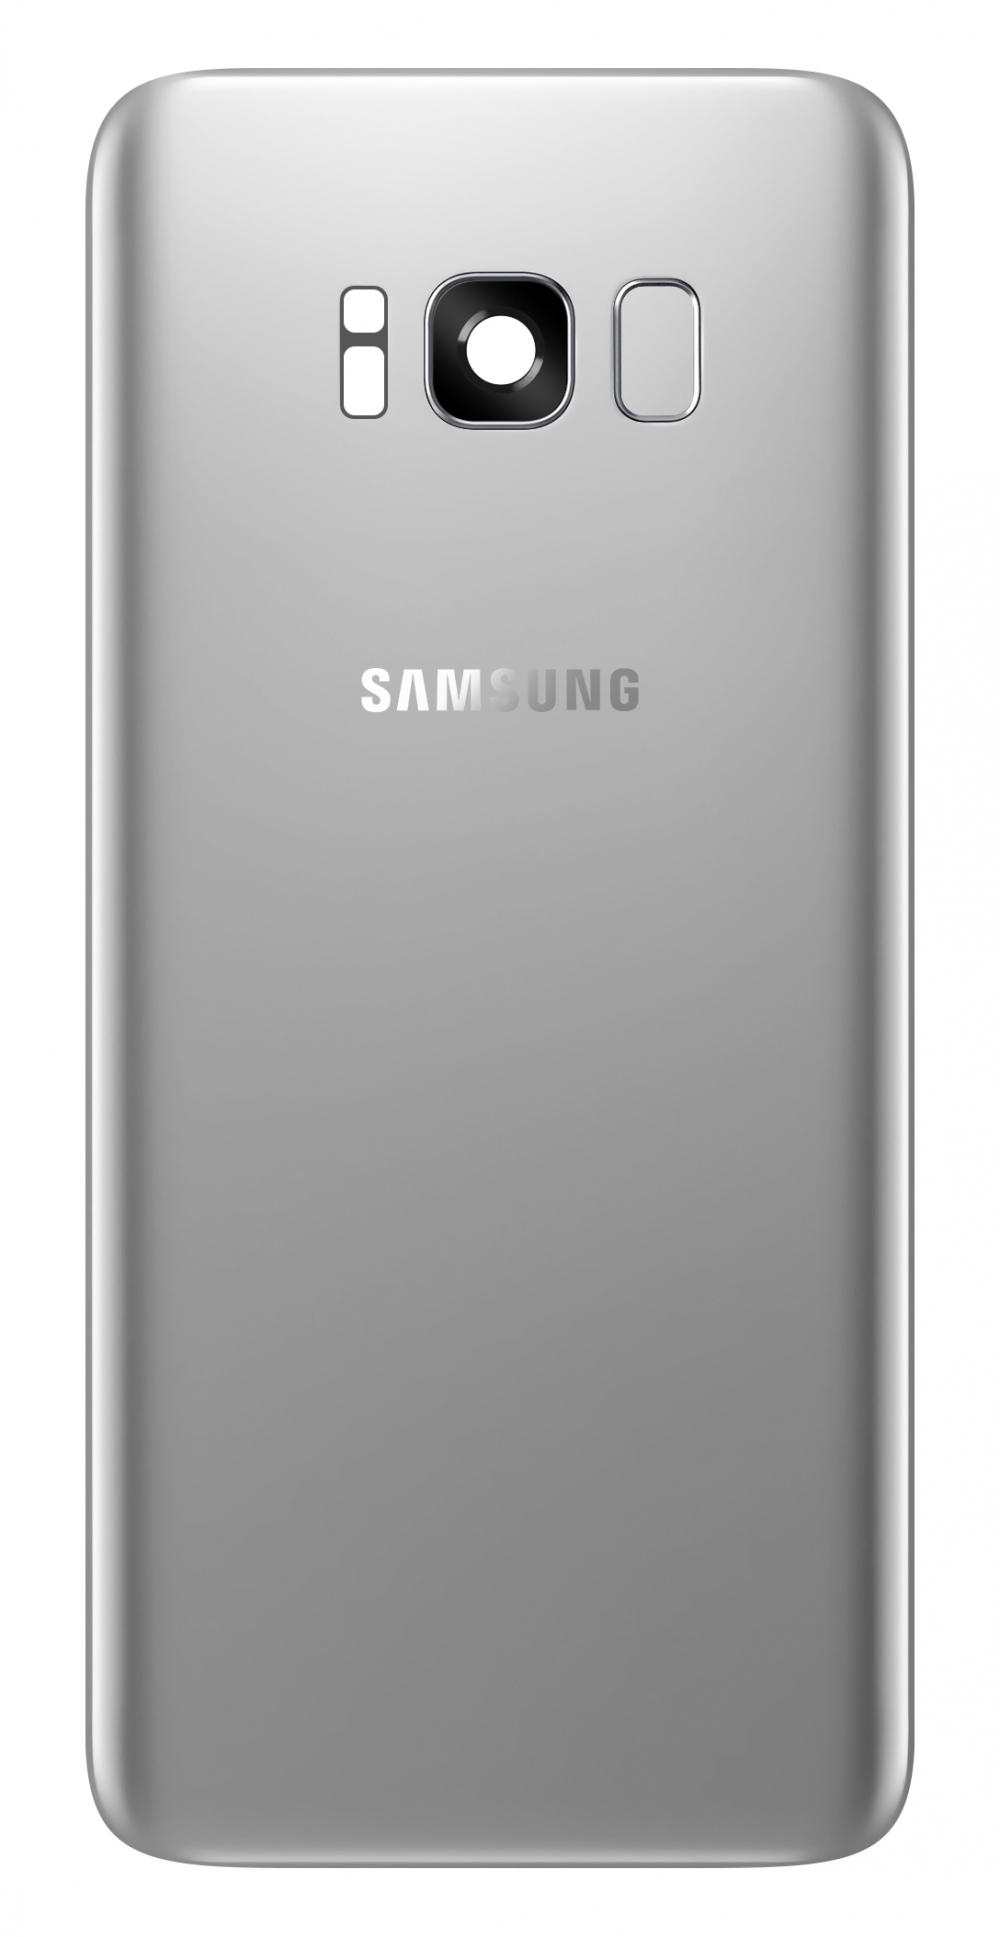 capac-baterie-samsung-galaxy-s8-g950-2C-cu-geam-blitz---senzor-amprenta-2C-argintiu-2C-swap